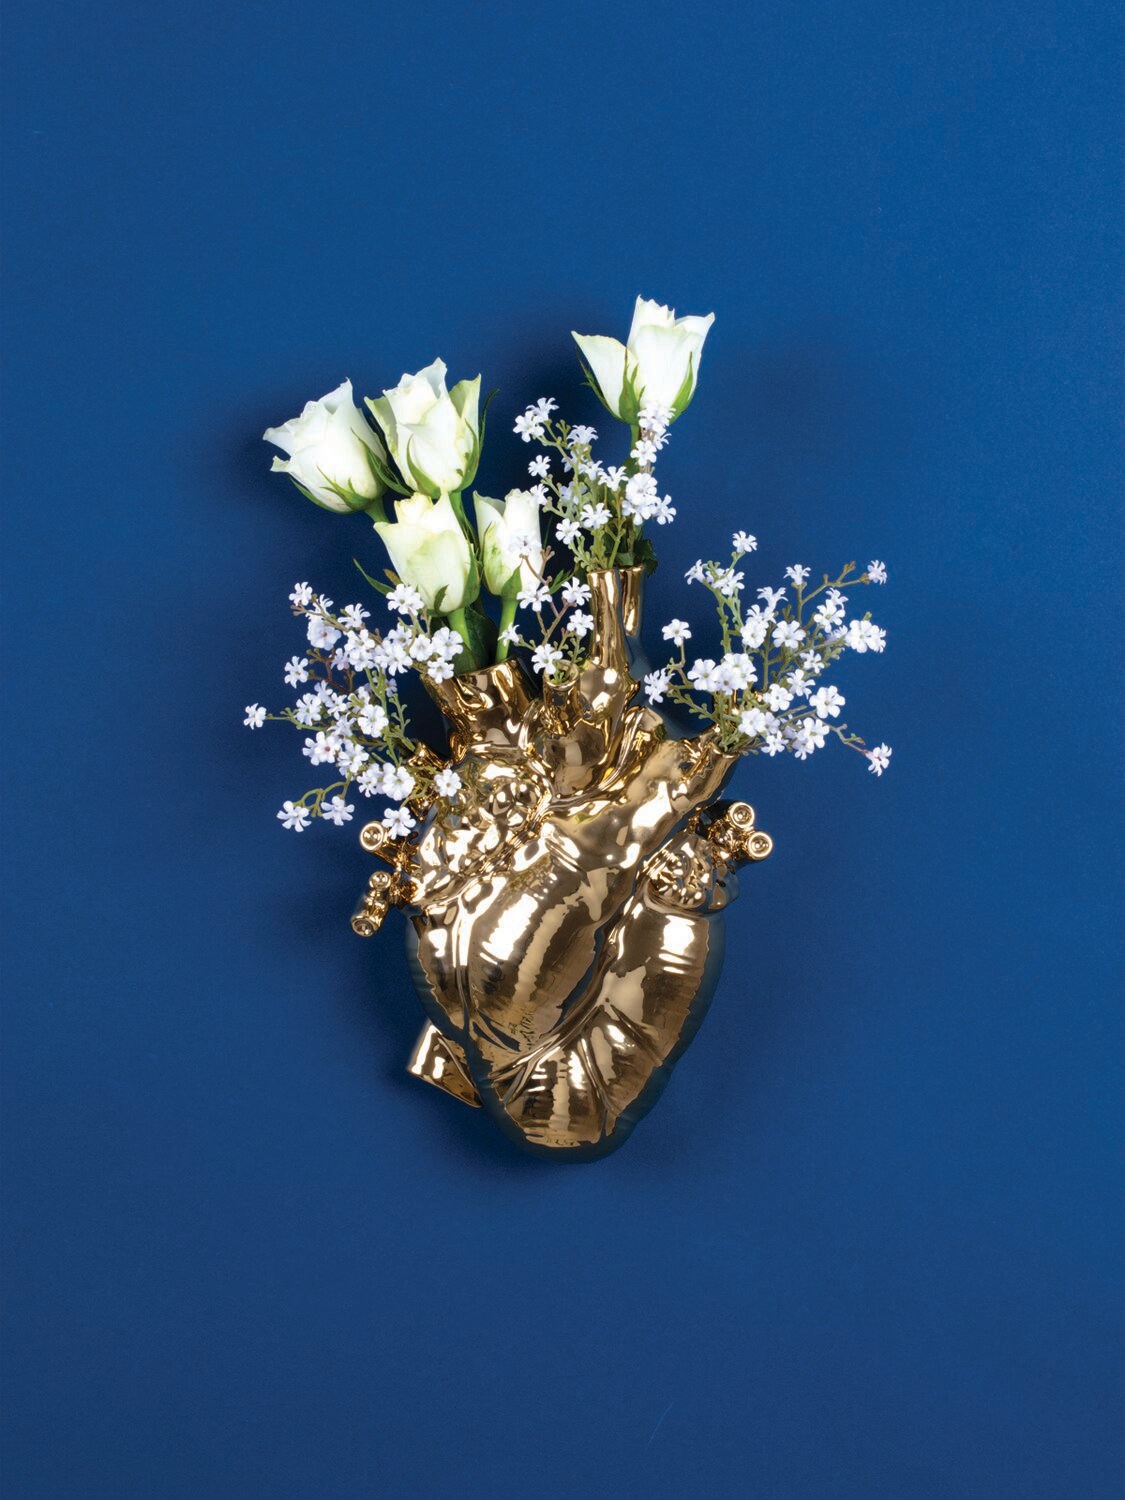 “LOVE IN BLOOM GOLD”陶瓷花瓶